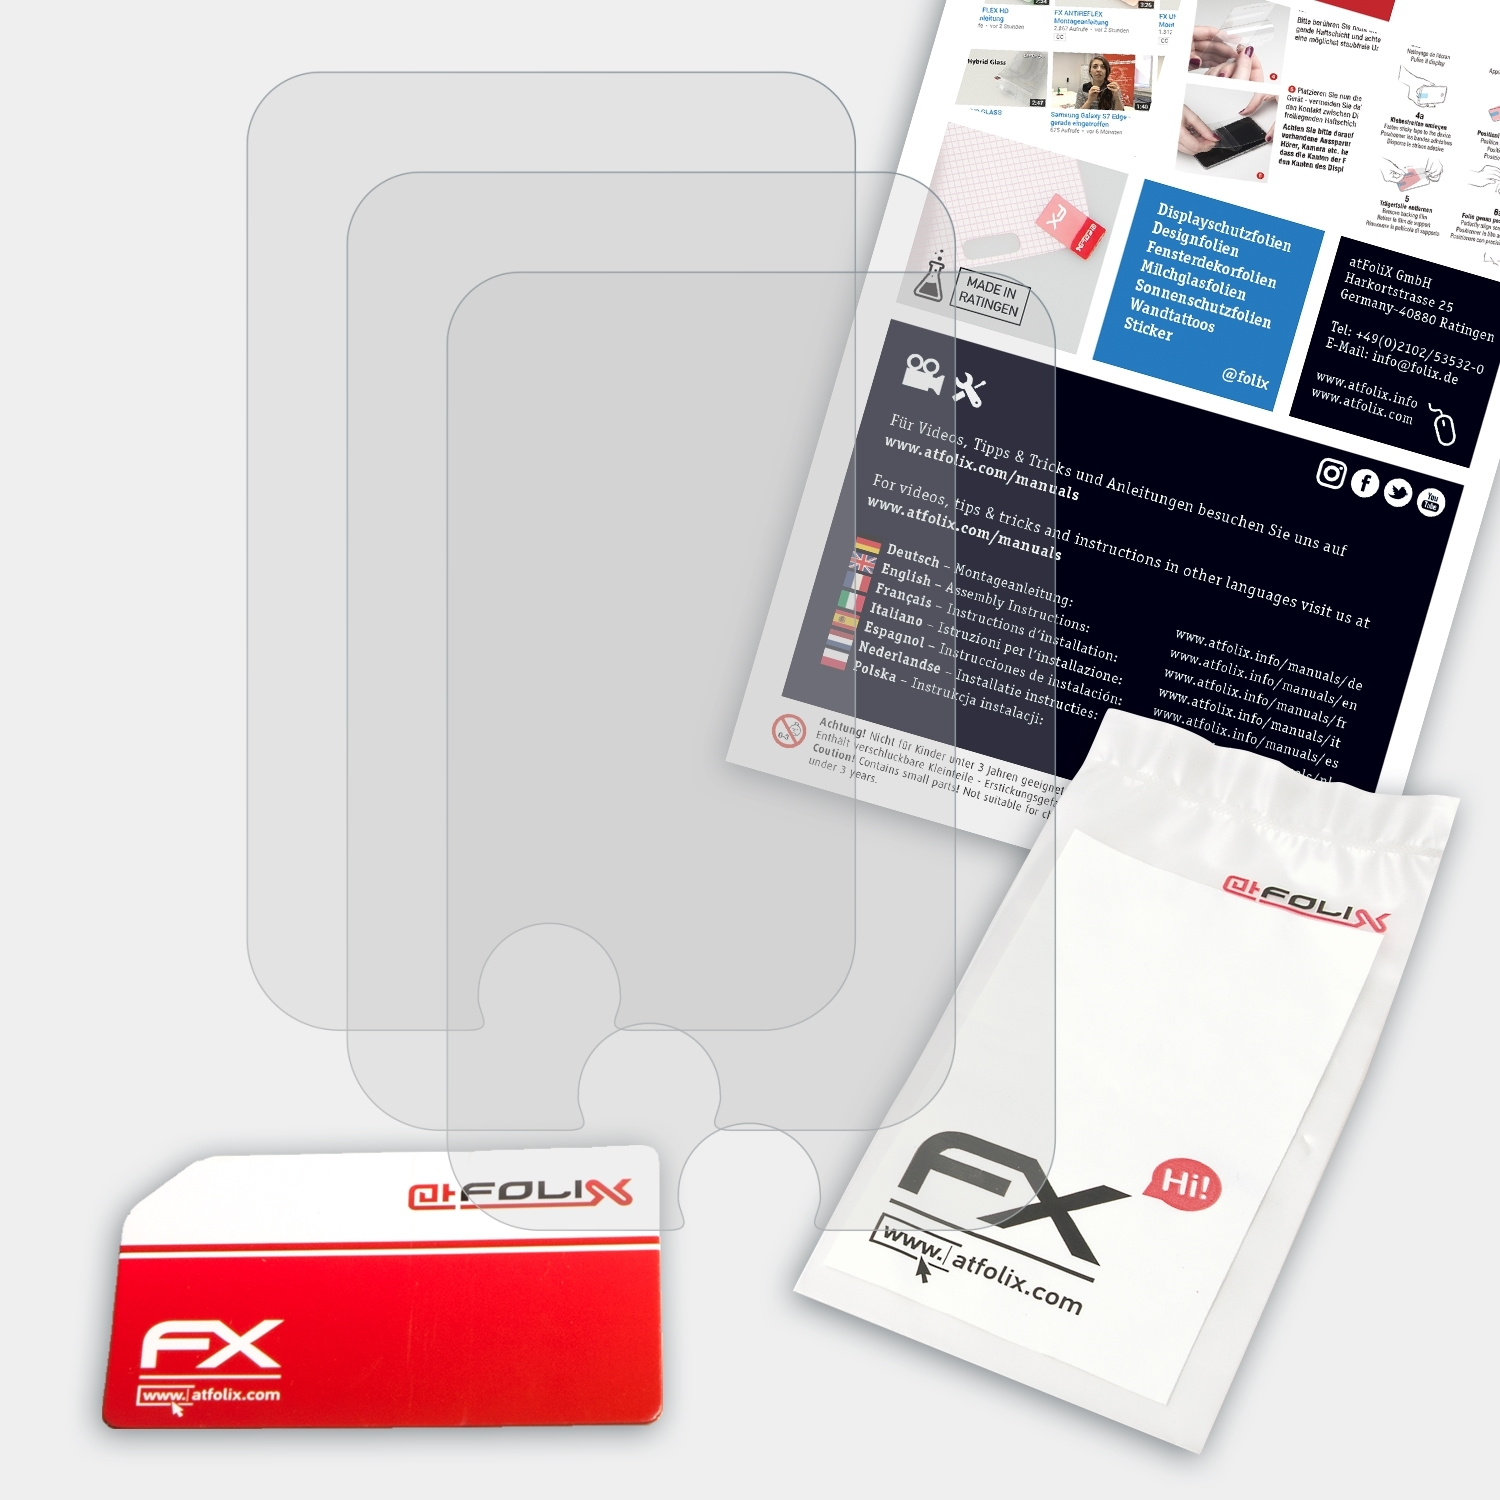 ATFOLIX 3x Displayschutz(für FX-Antireflex Blaupunkt BikePilot)